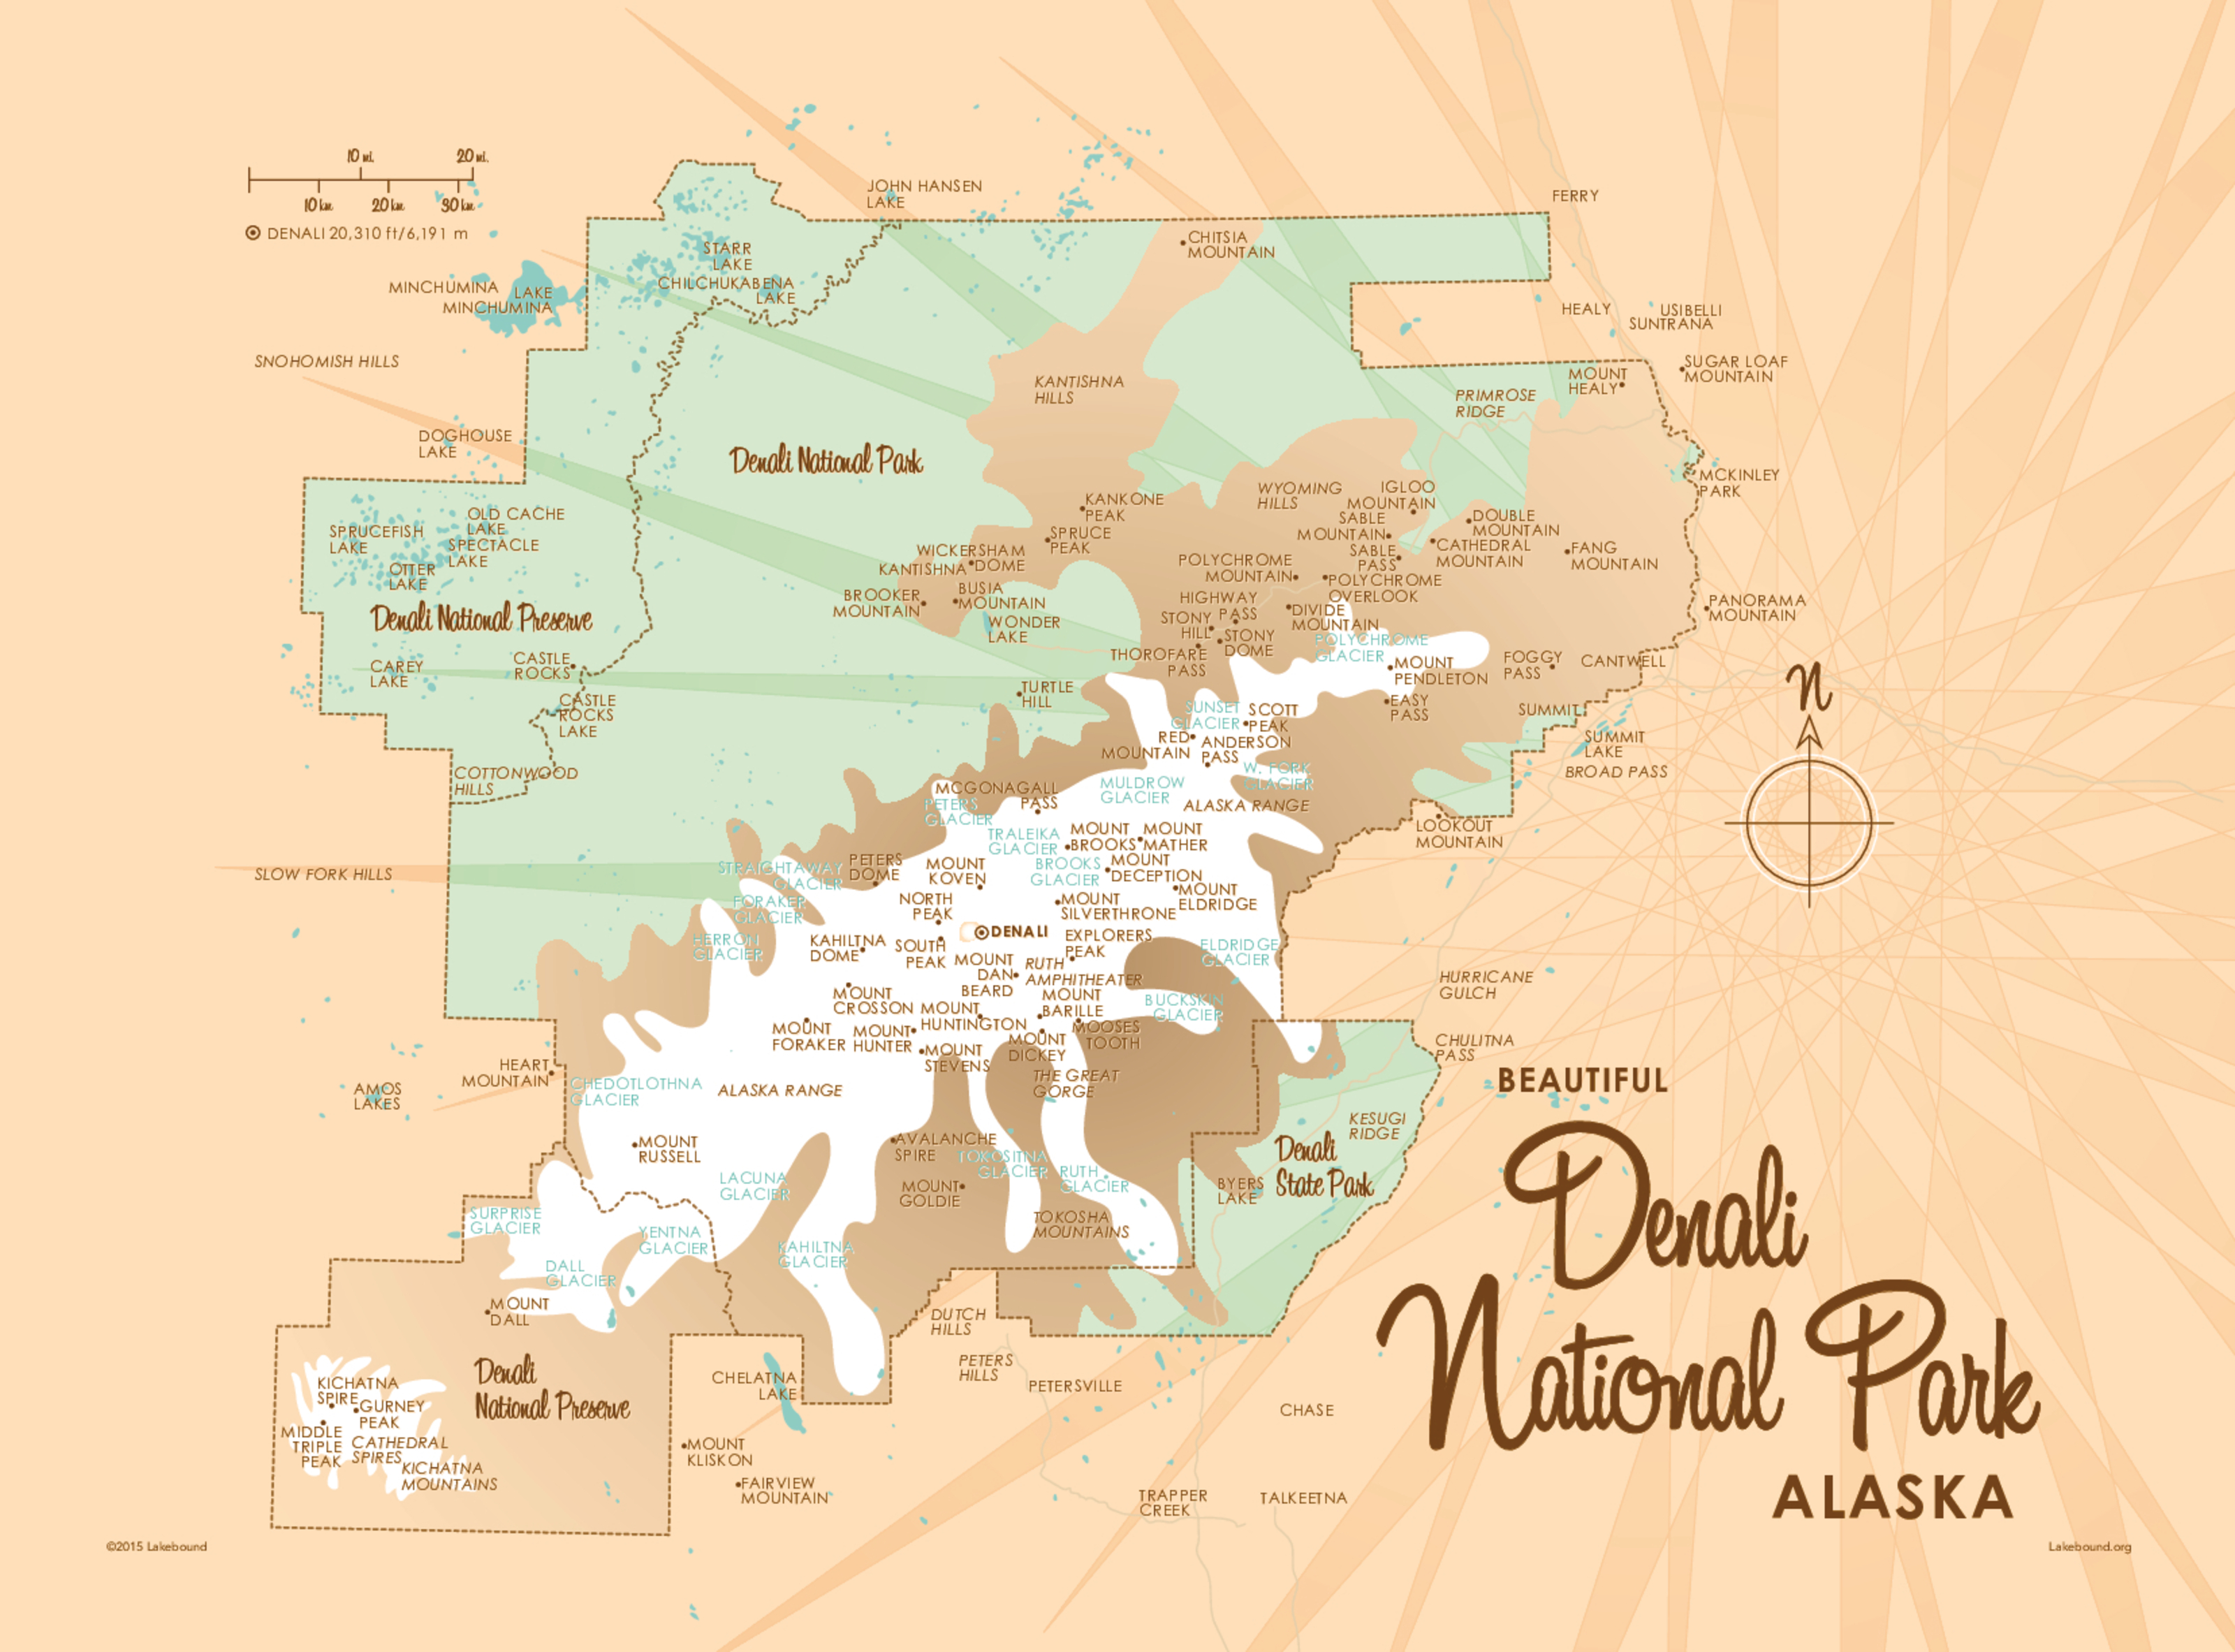 Denali National Park and Preserve Wallpapers, HD Denali National Park and  Preserve Backgrounds, Free Images Download